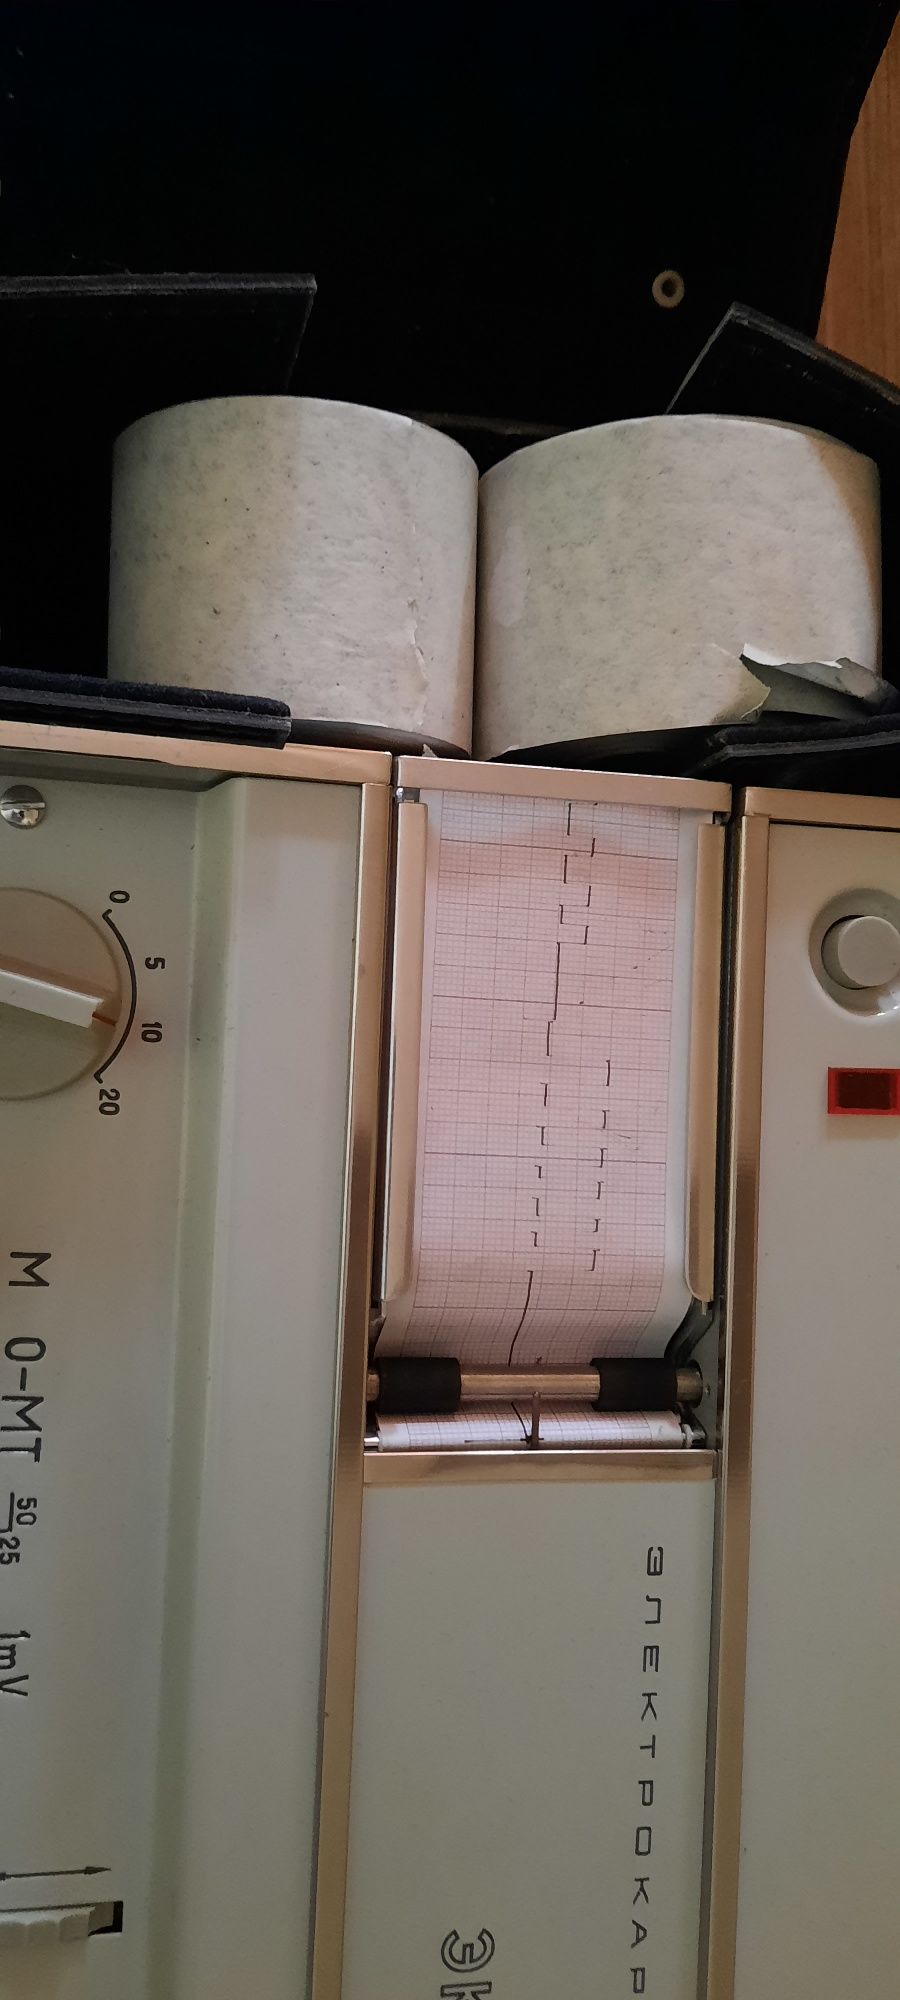 Електрокардоиограф, нов за колекционерска цел ЕК 1 Т 03 М